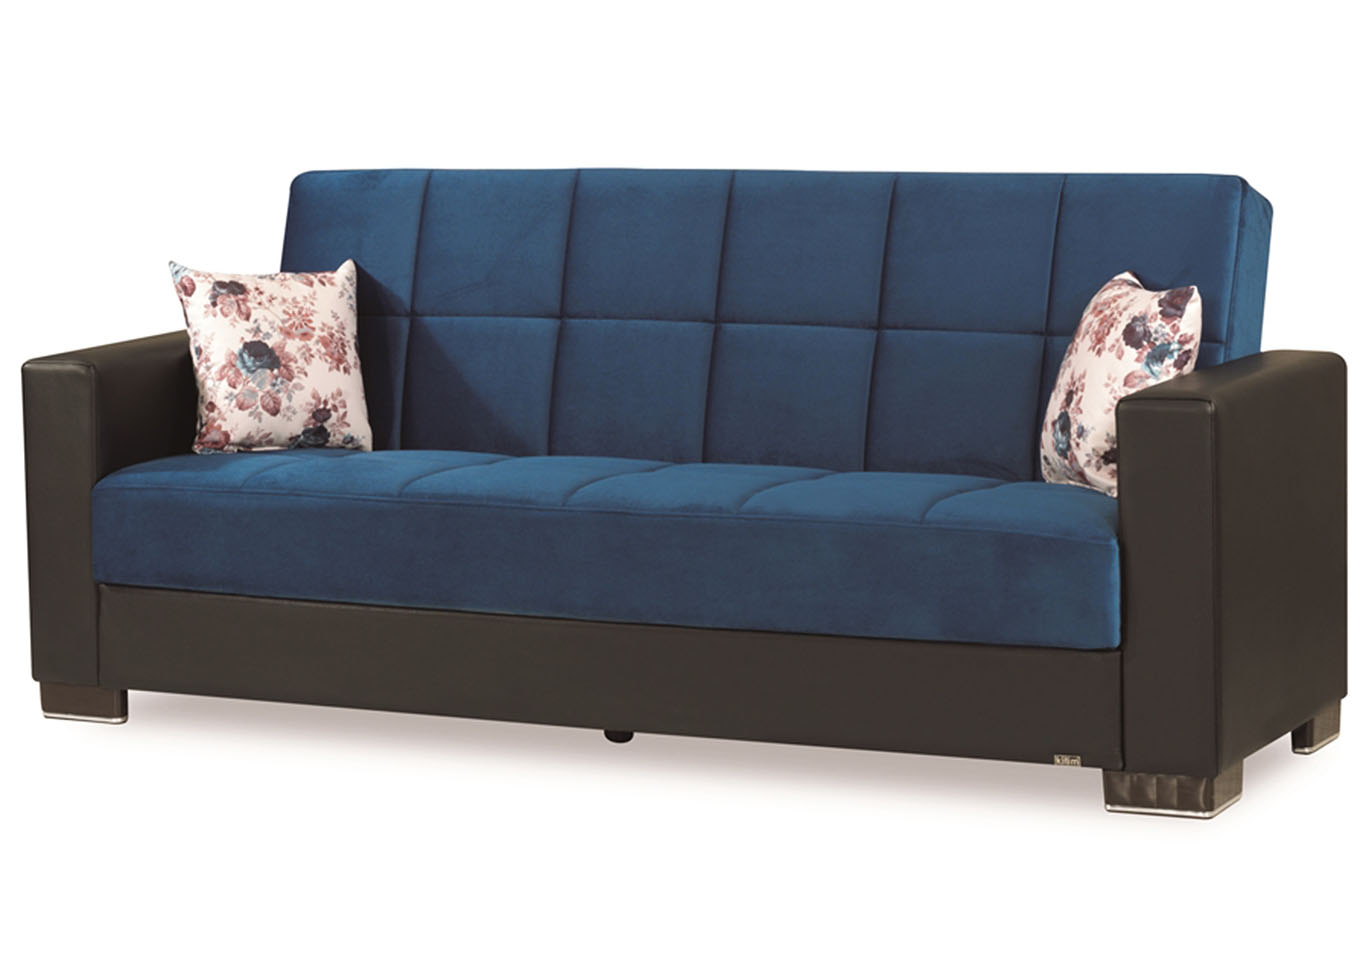 Armada Turquoise #17 Microfiber Sofa,Ottomanson (Previously Casamode)